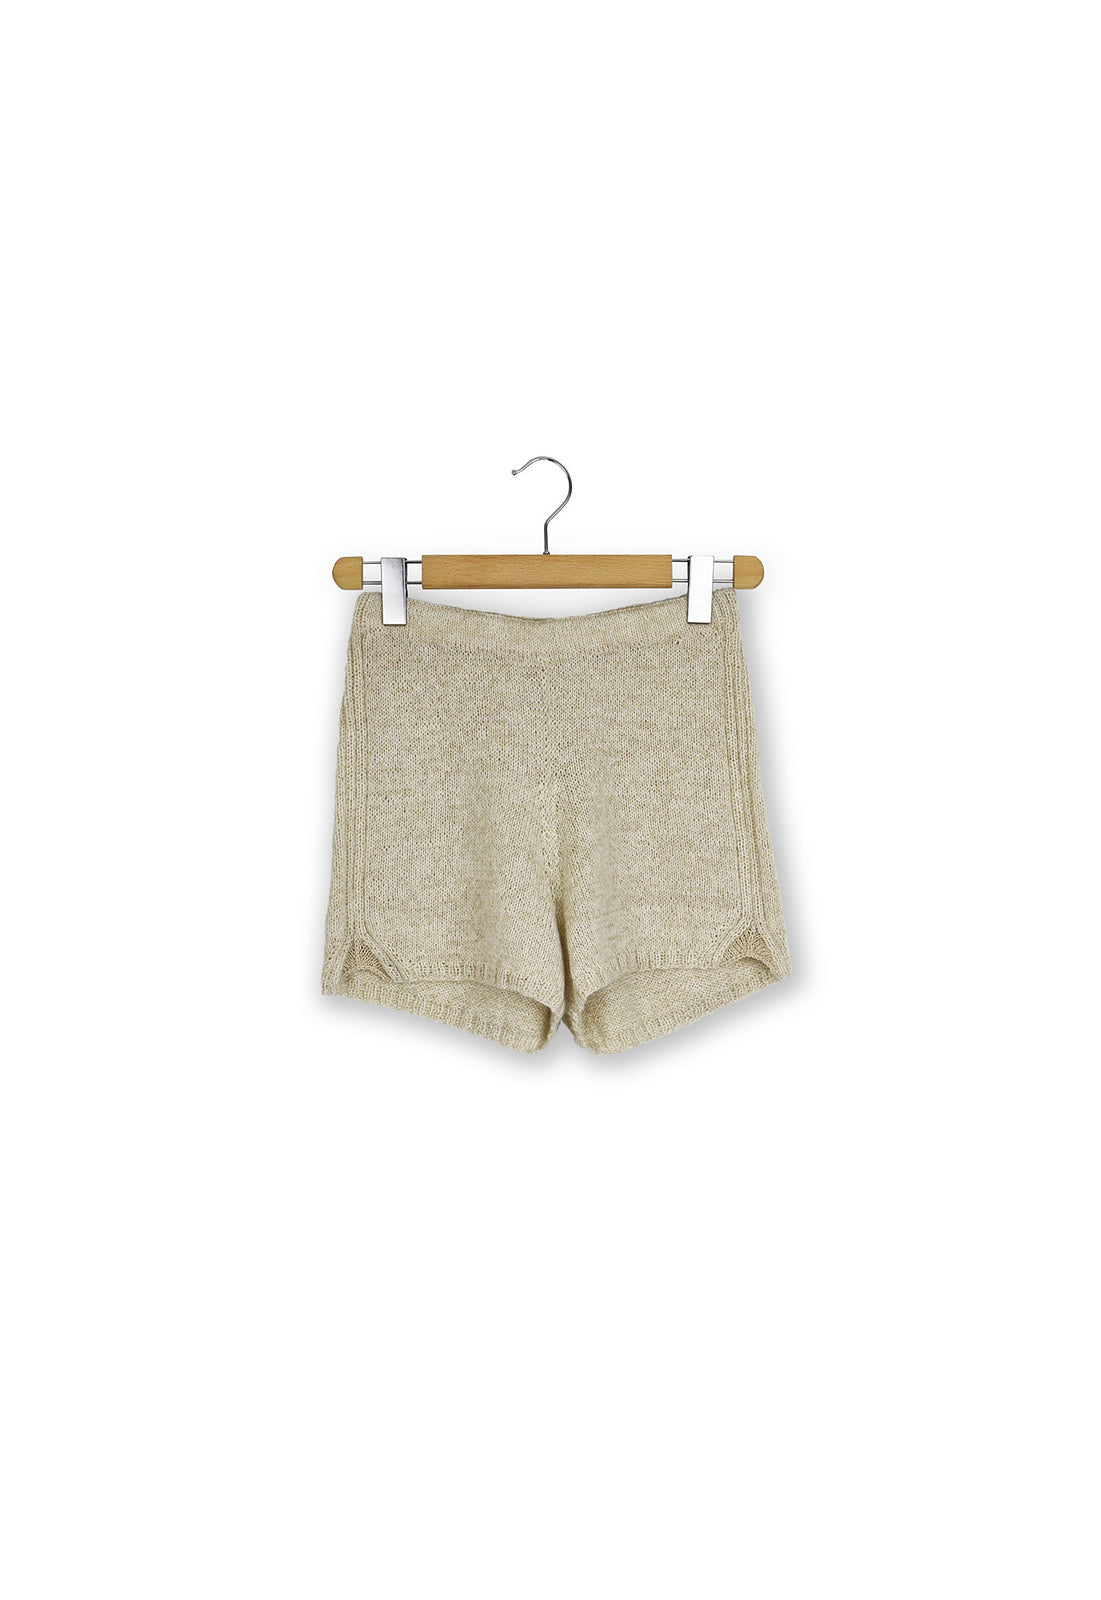 Tan Top or Shorts キット -Hør Organic- (印刷版日本語文章パターン付き)